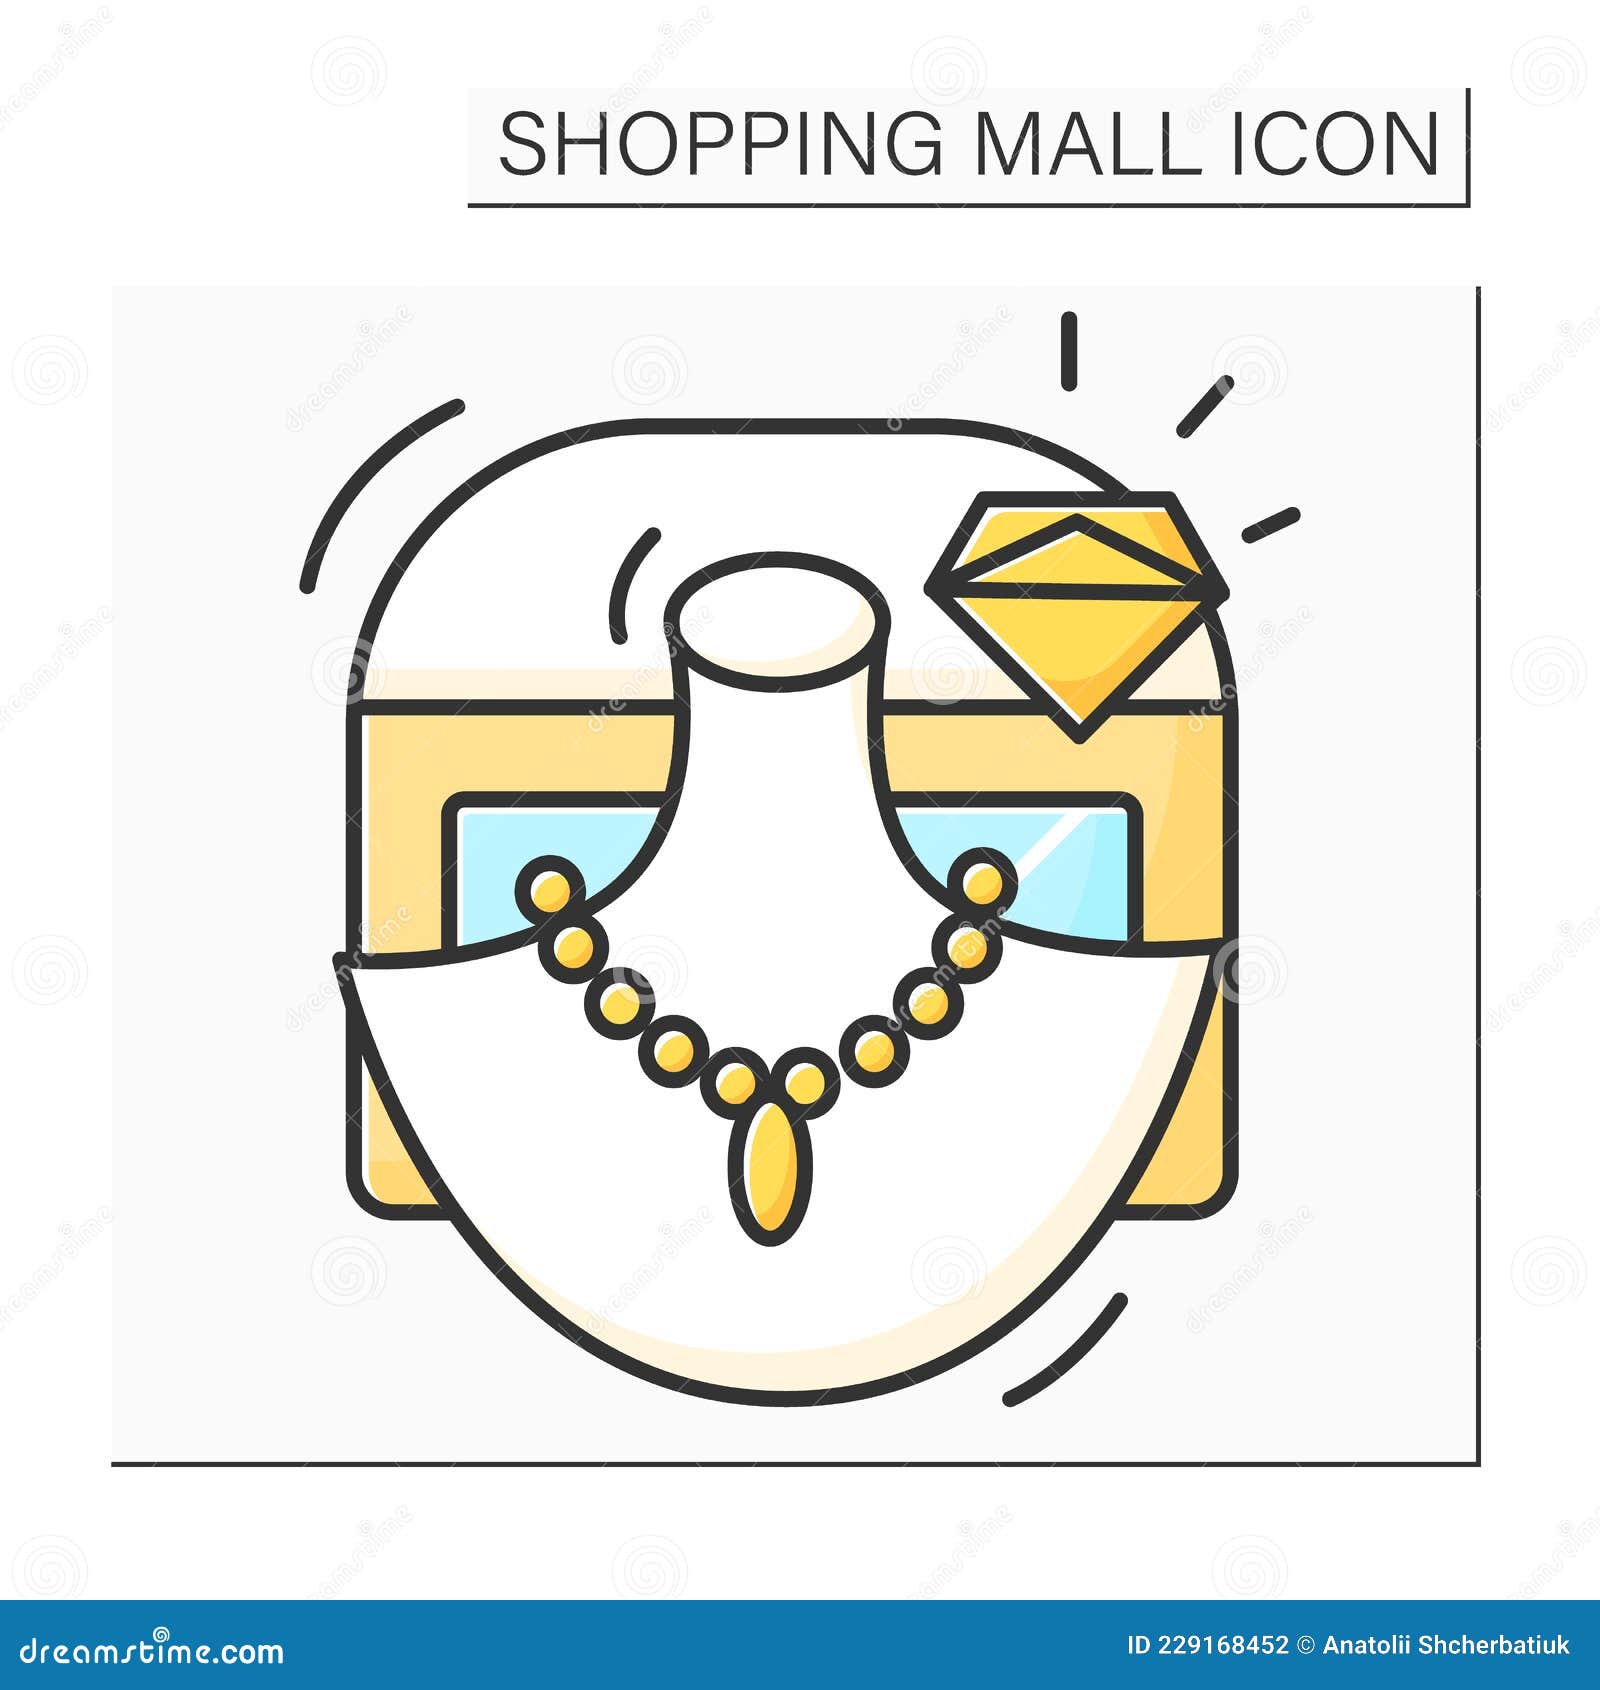 Personal Shopper Logo Stock Illustrations – 12 Personal Shopper Logo Stock  Illustrations, Vectors & Clipart - Dreamstime